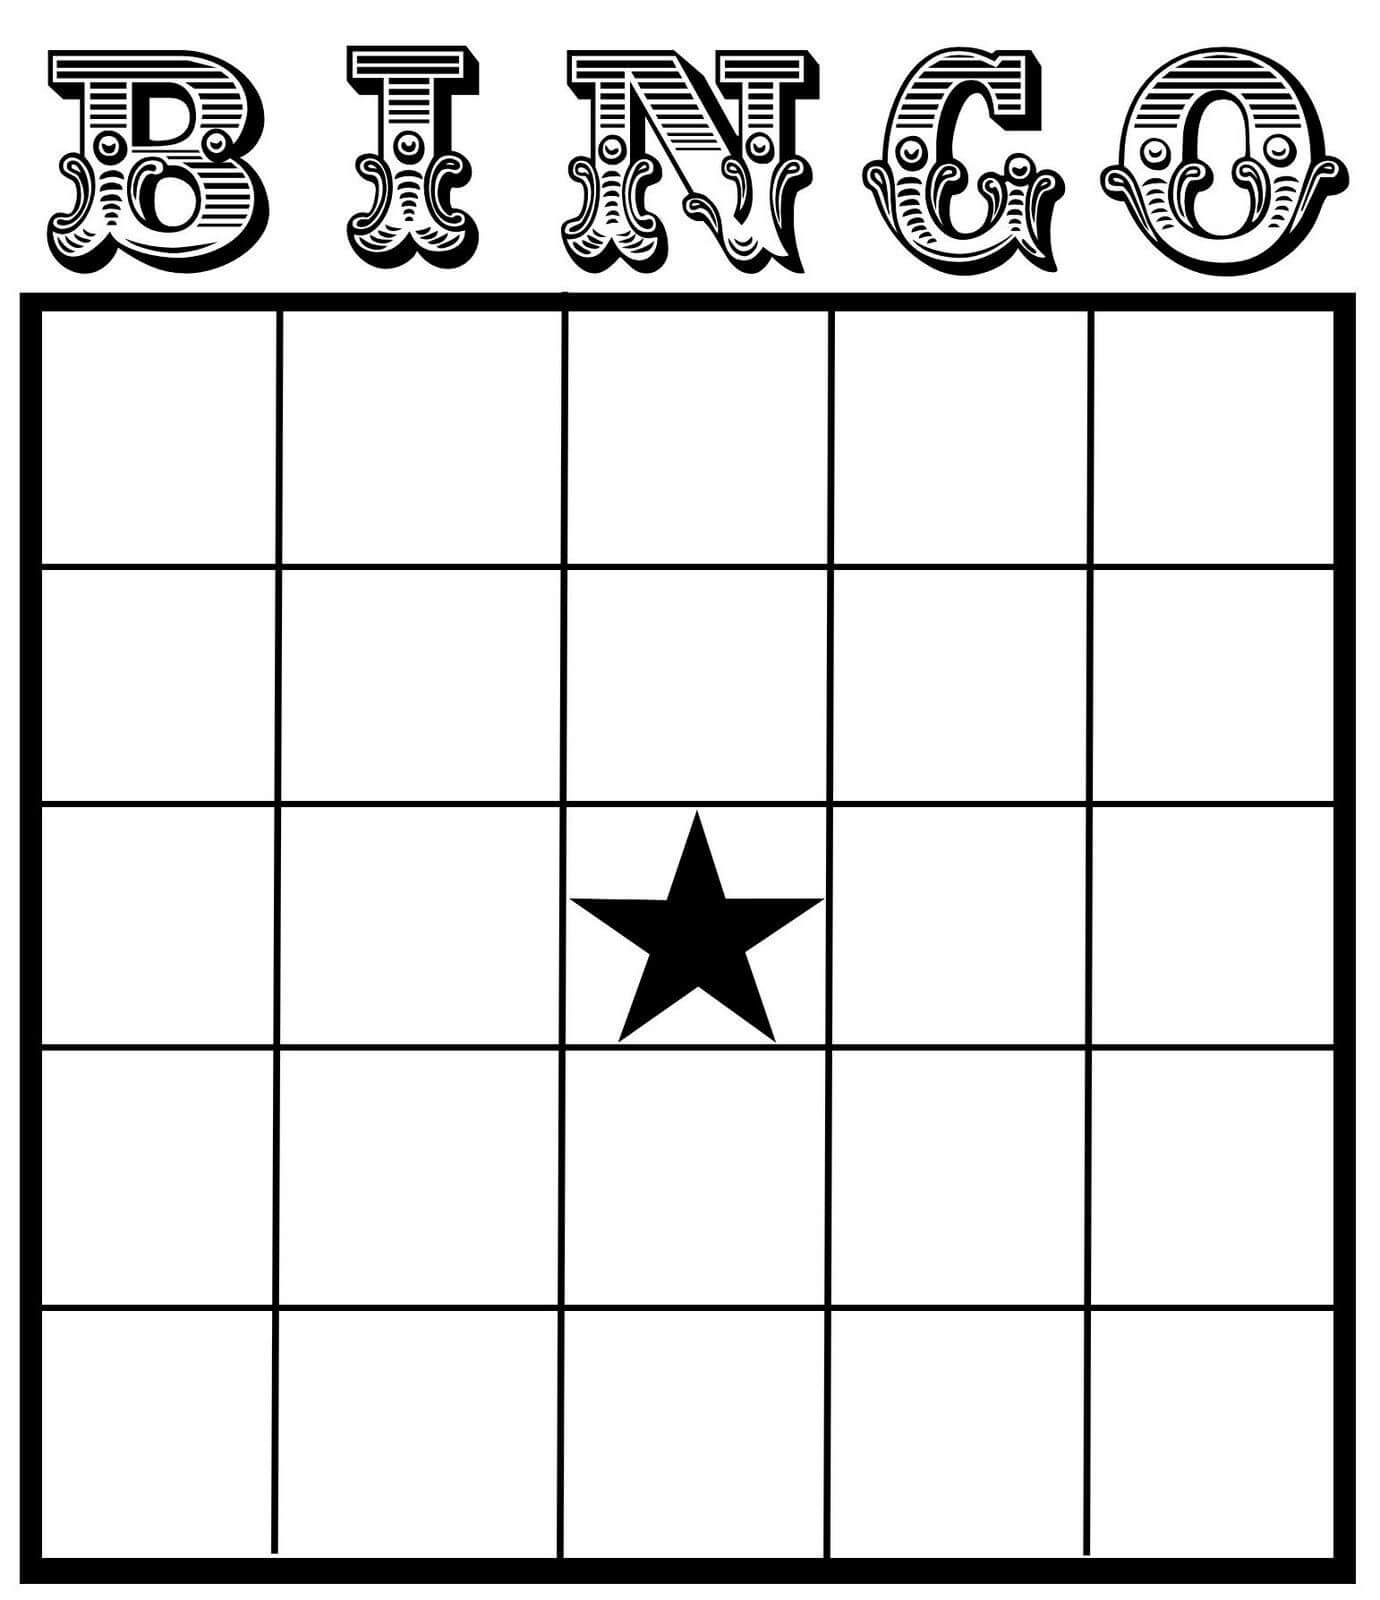 002 Blank Bingo Card Template Ideas Stirring Baby Shower Intended For Blank Bingo Template Pdf